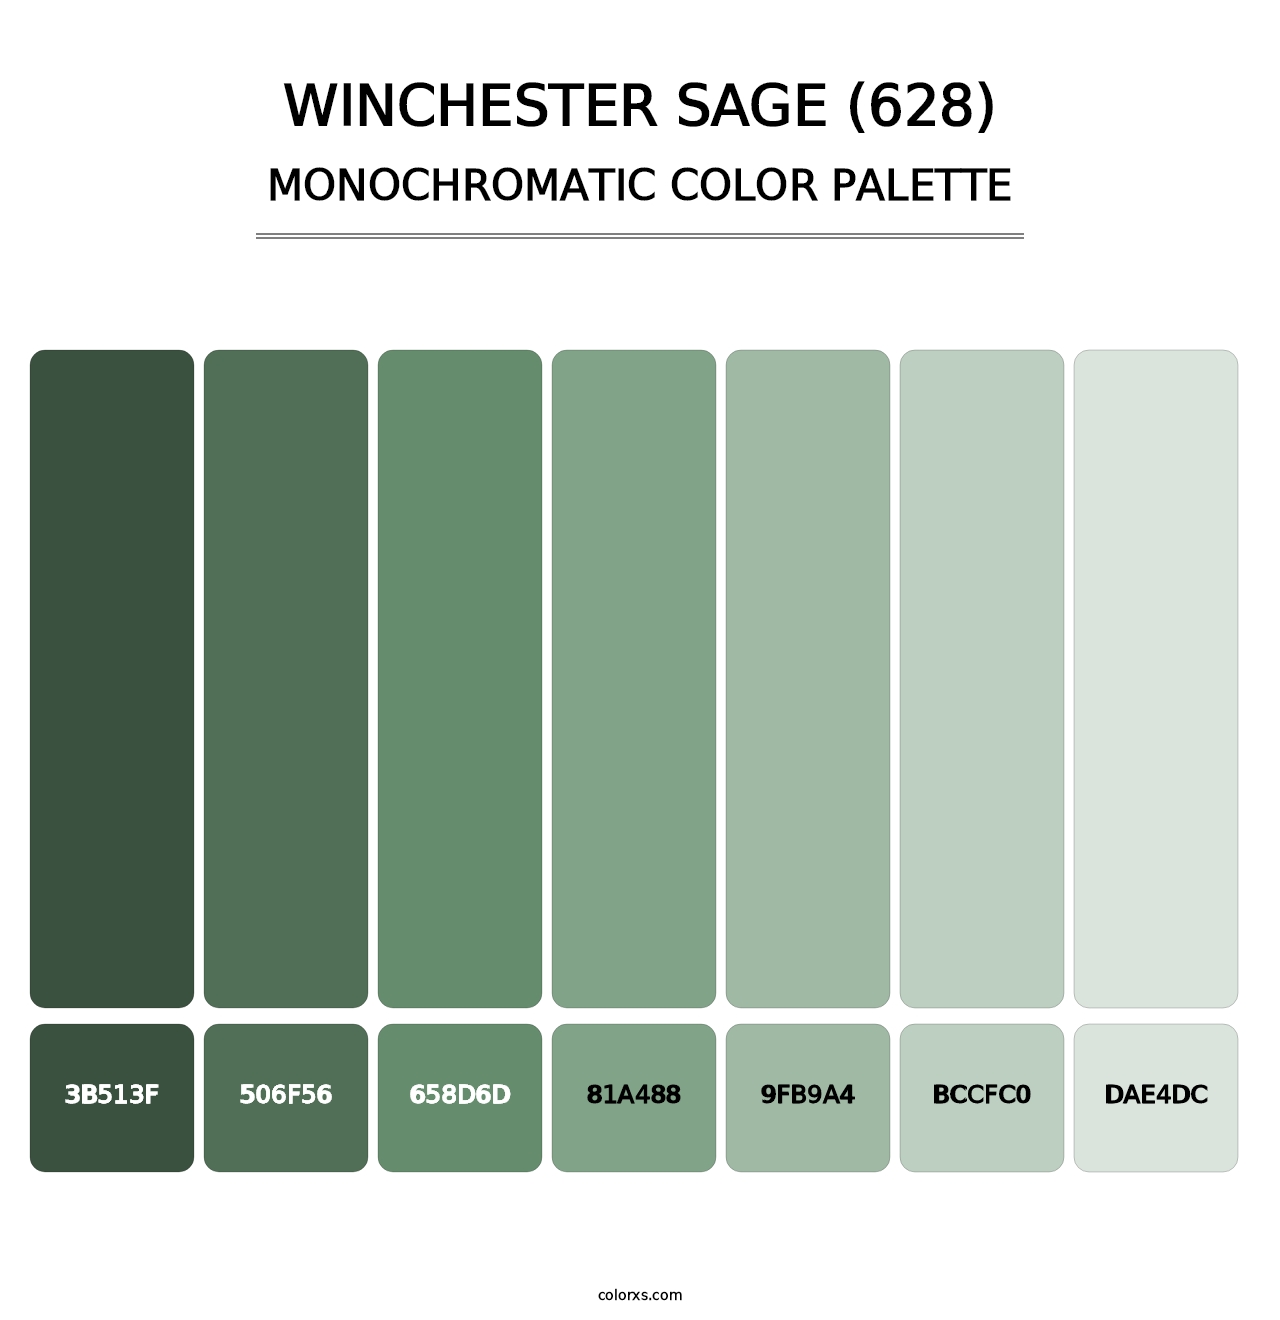 Winchester Sage (628) - Monochromatic Color Palette